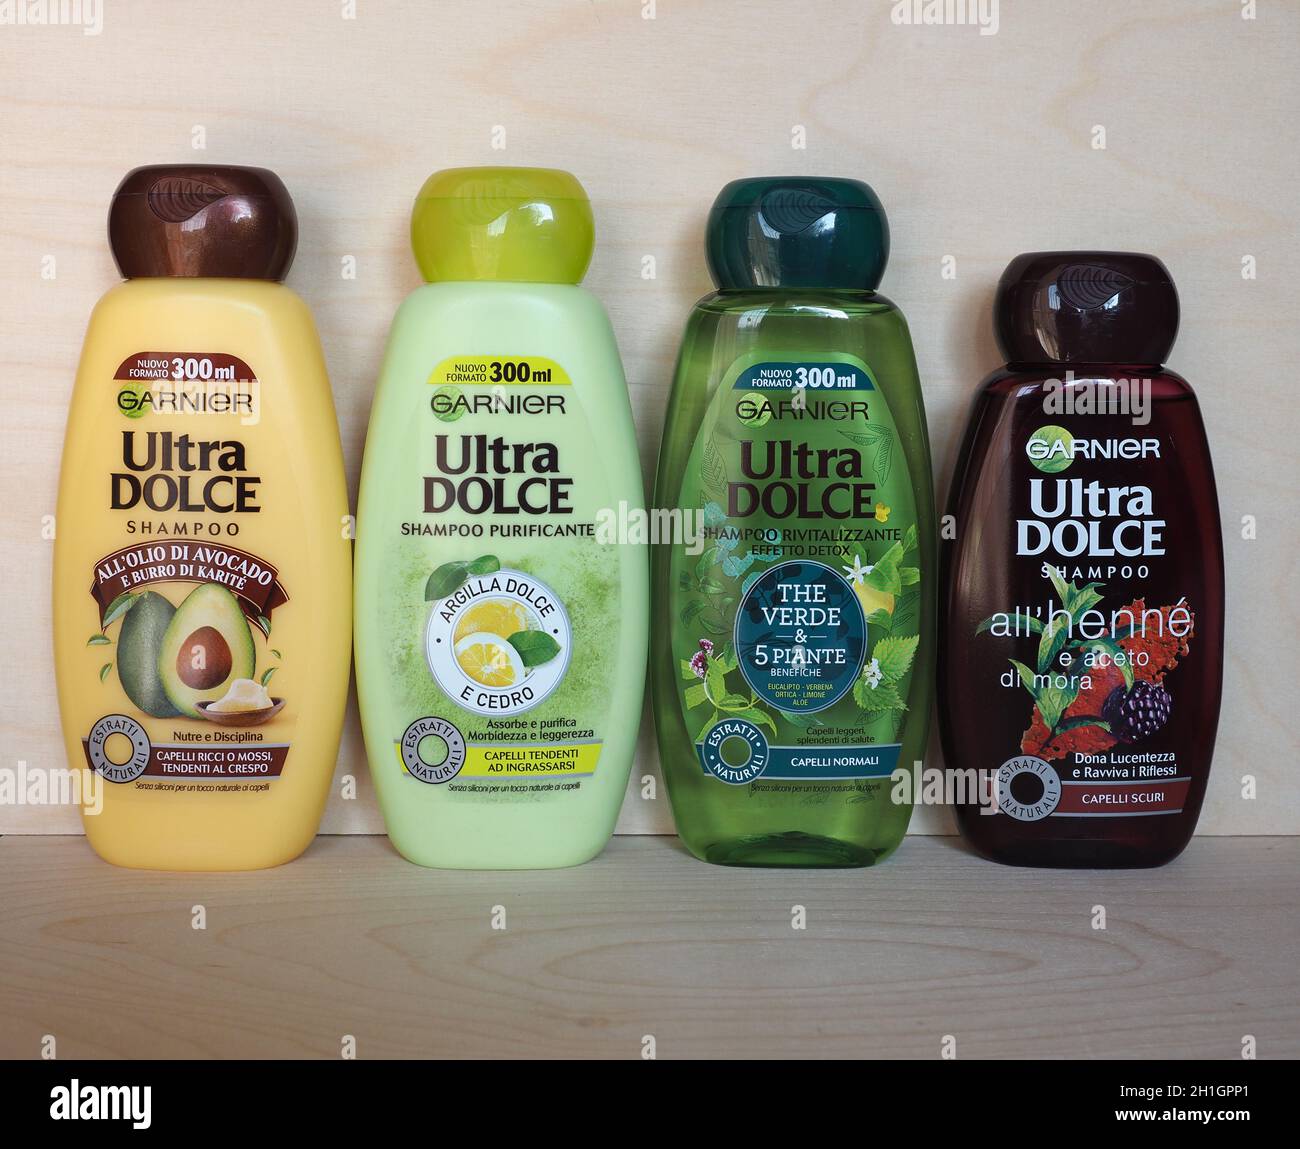 PARIS, FRANCE - CIRCA JULY 2020: Garnier Ultra Dolce shampoo bottles series  Stock Photo - Alamy